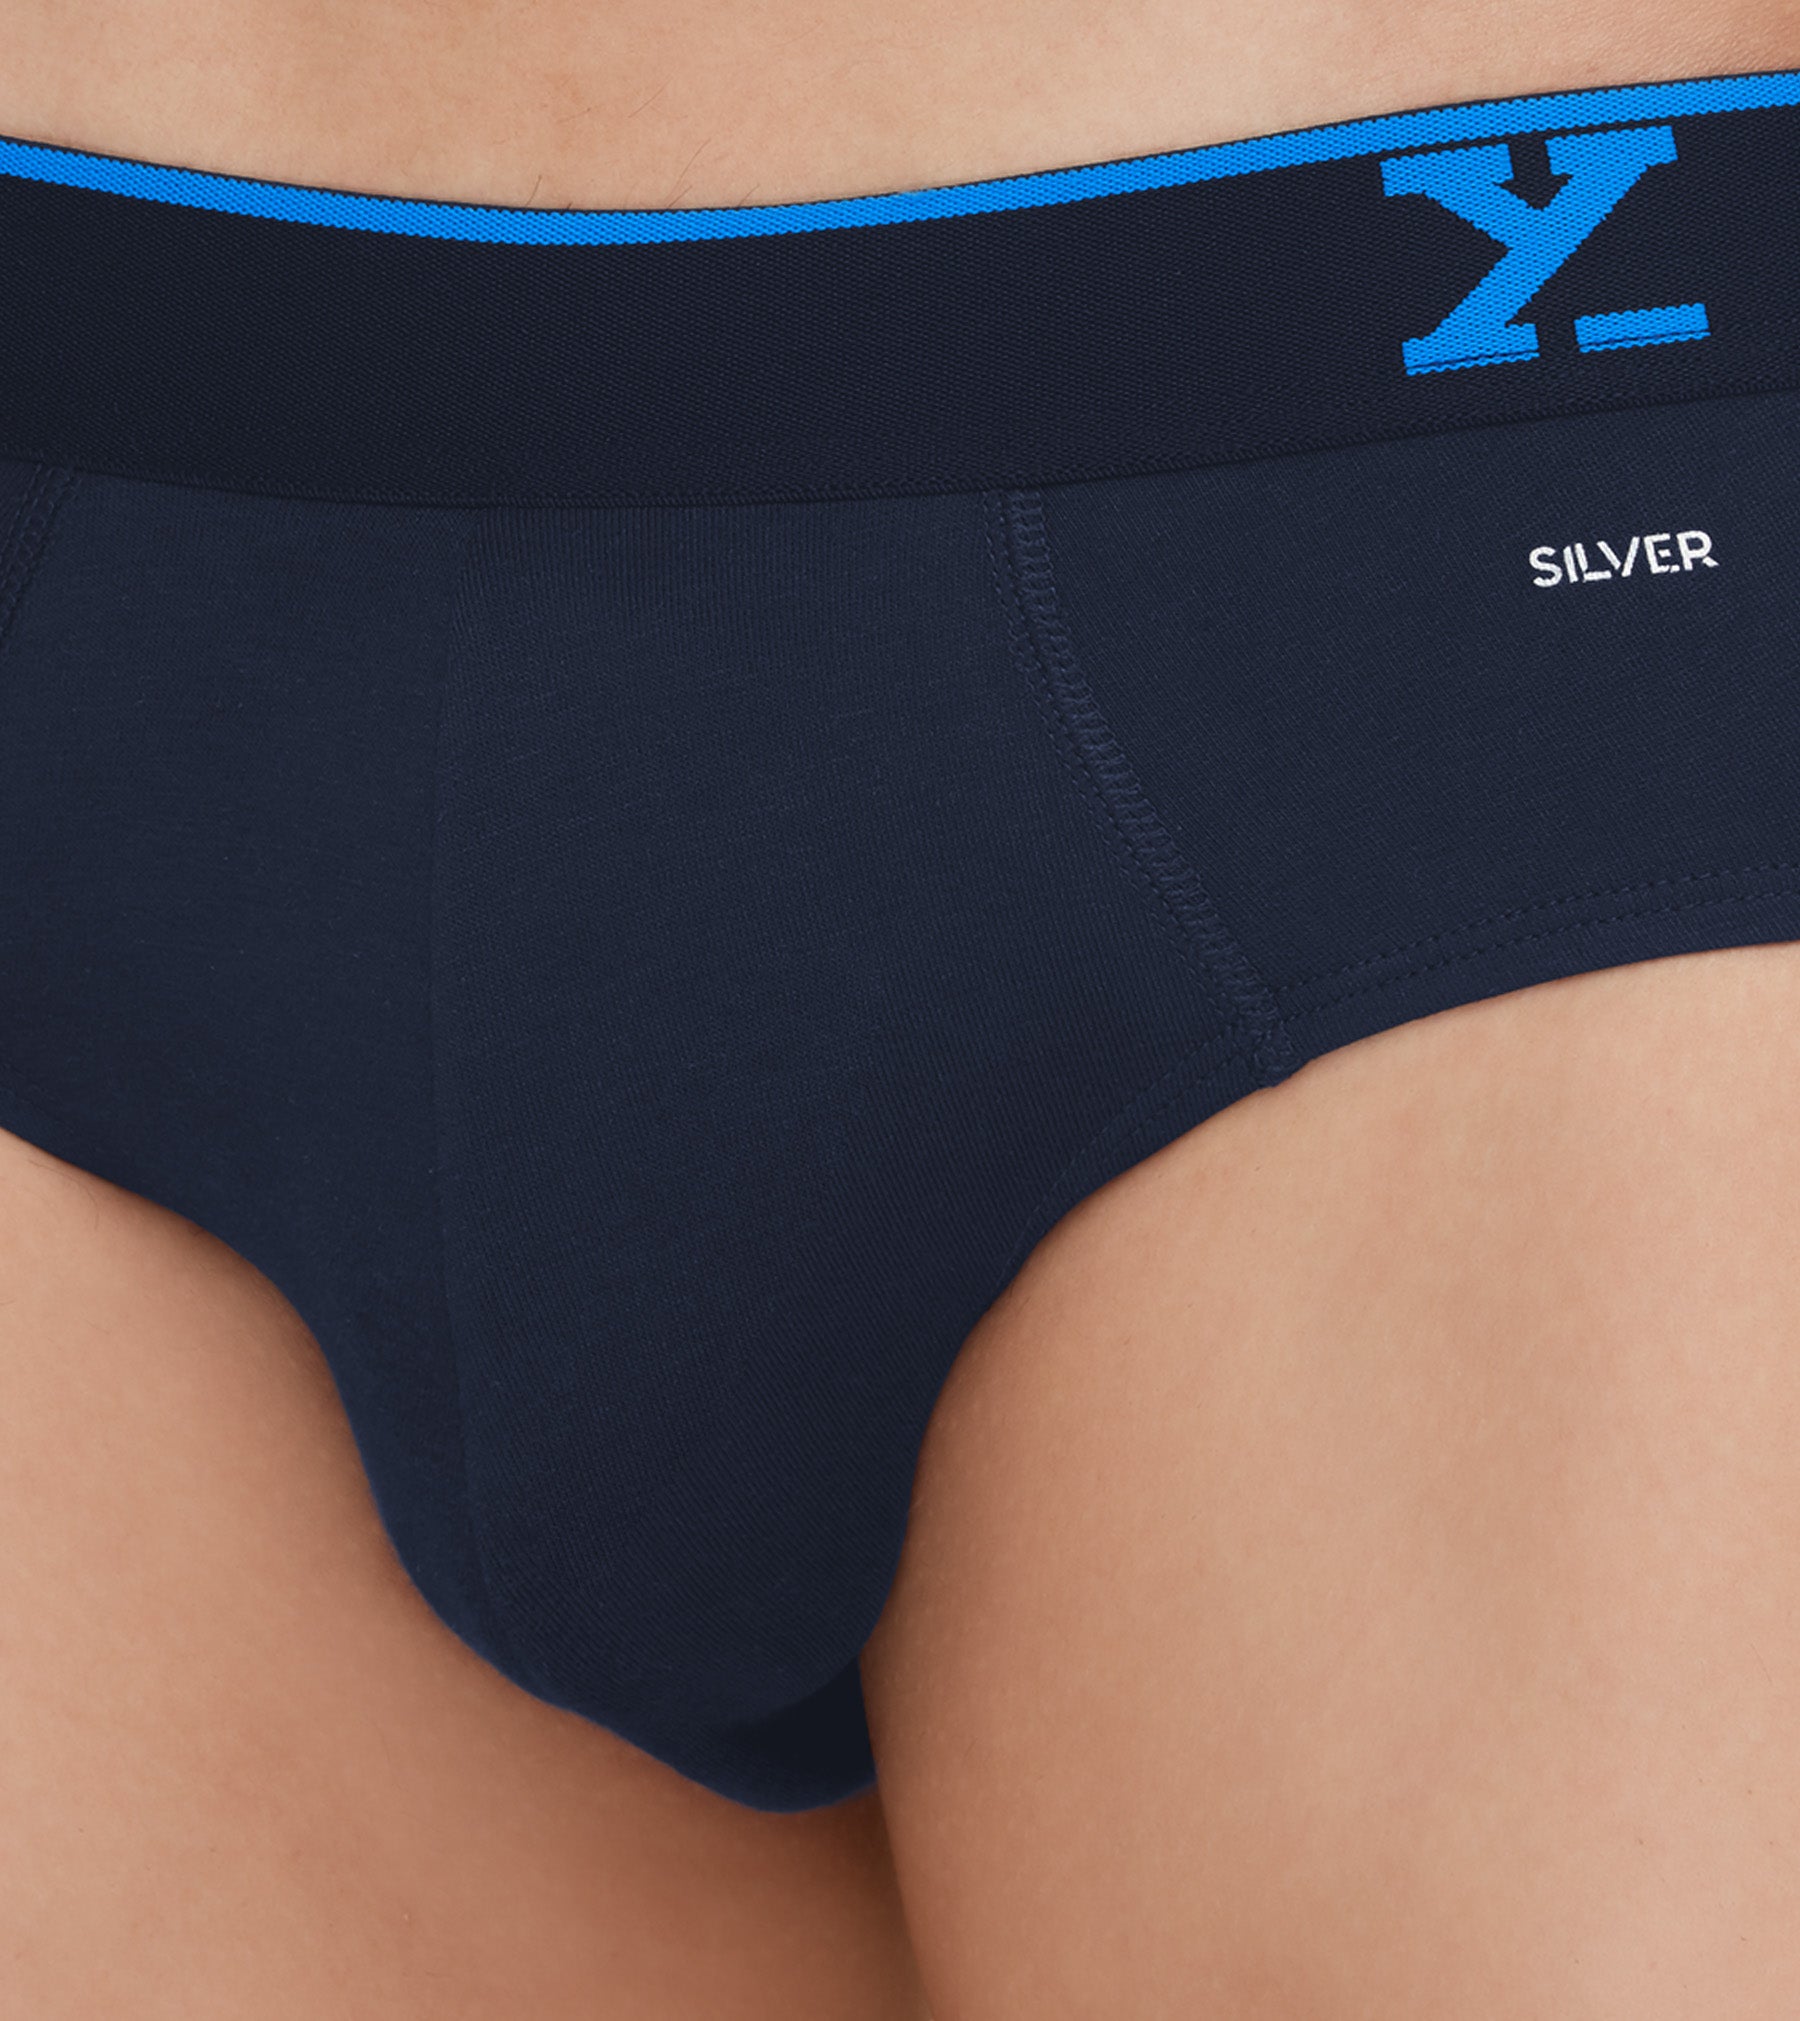 Traq Silver Cotton Briefs For Men Pack of 3(Aqua Blue, Dark Blue,Red) -  XYXX Mens Apparels